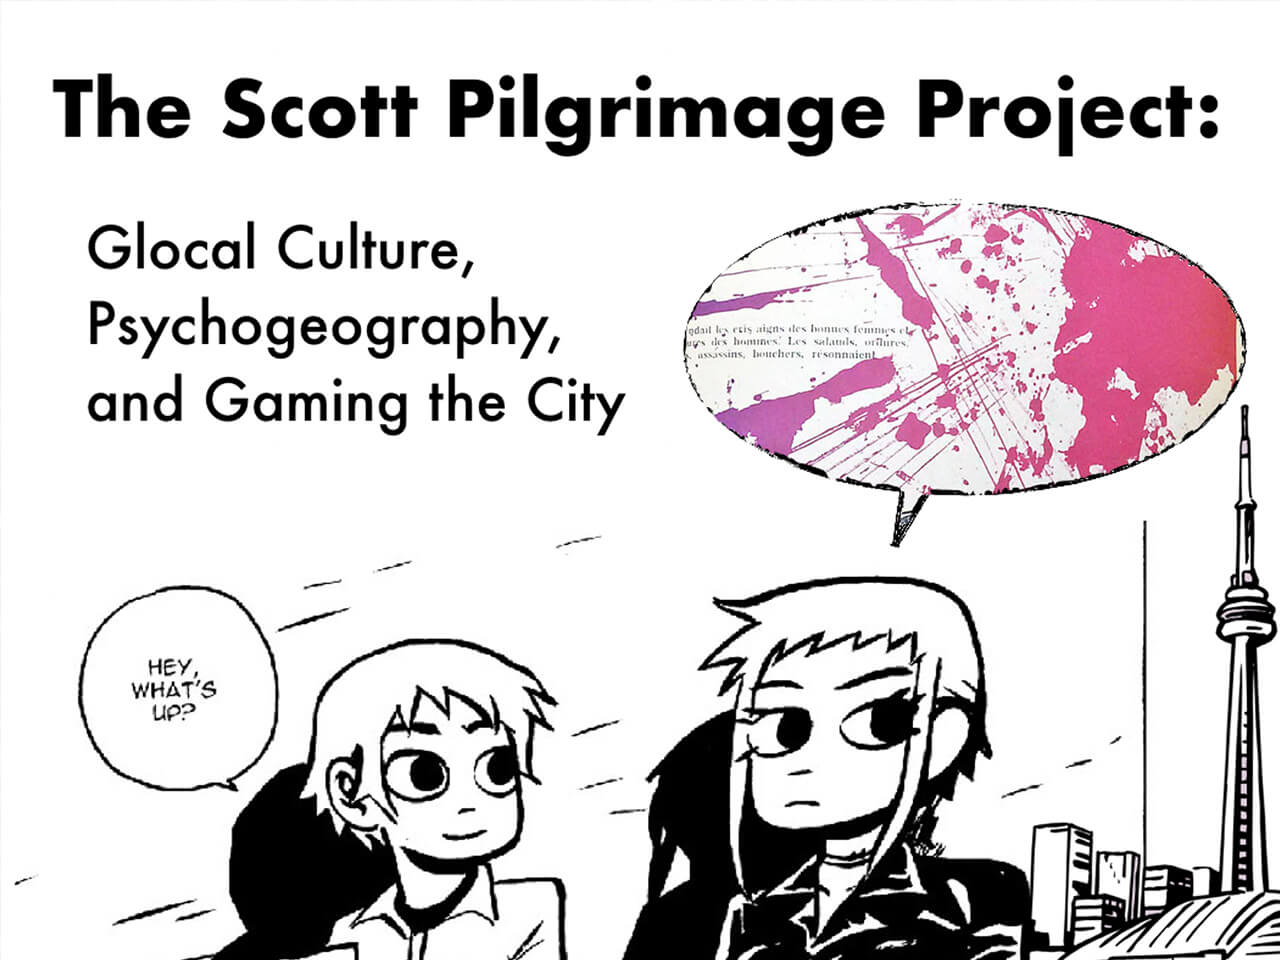 The Scott Pilgrimage Project